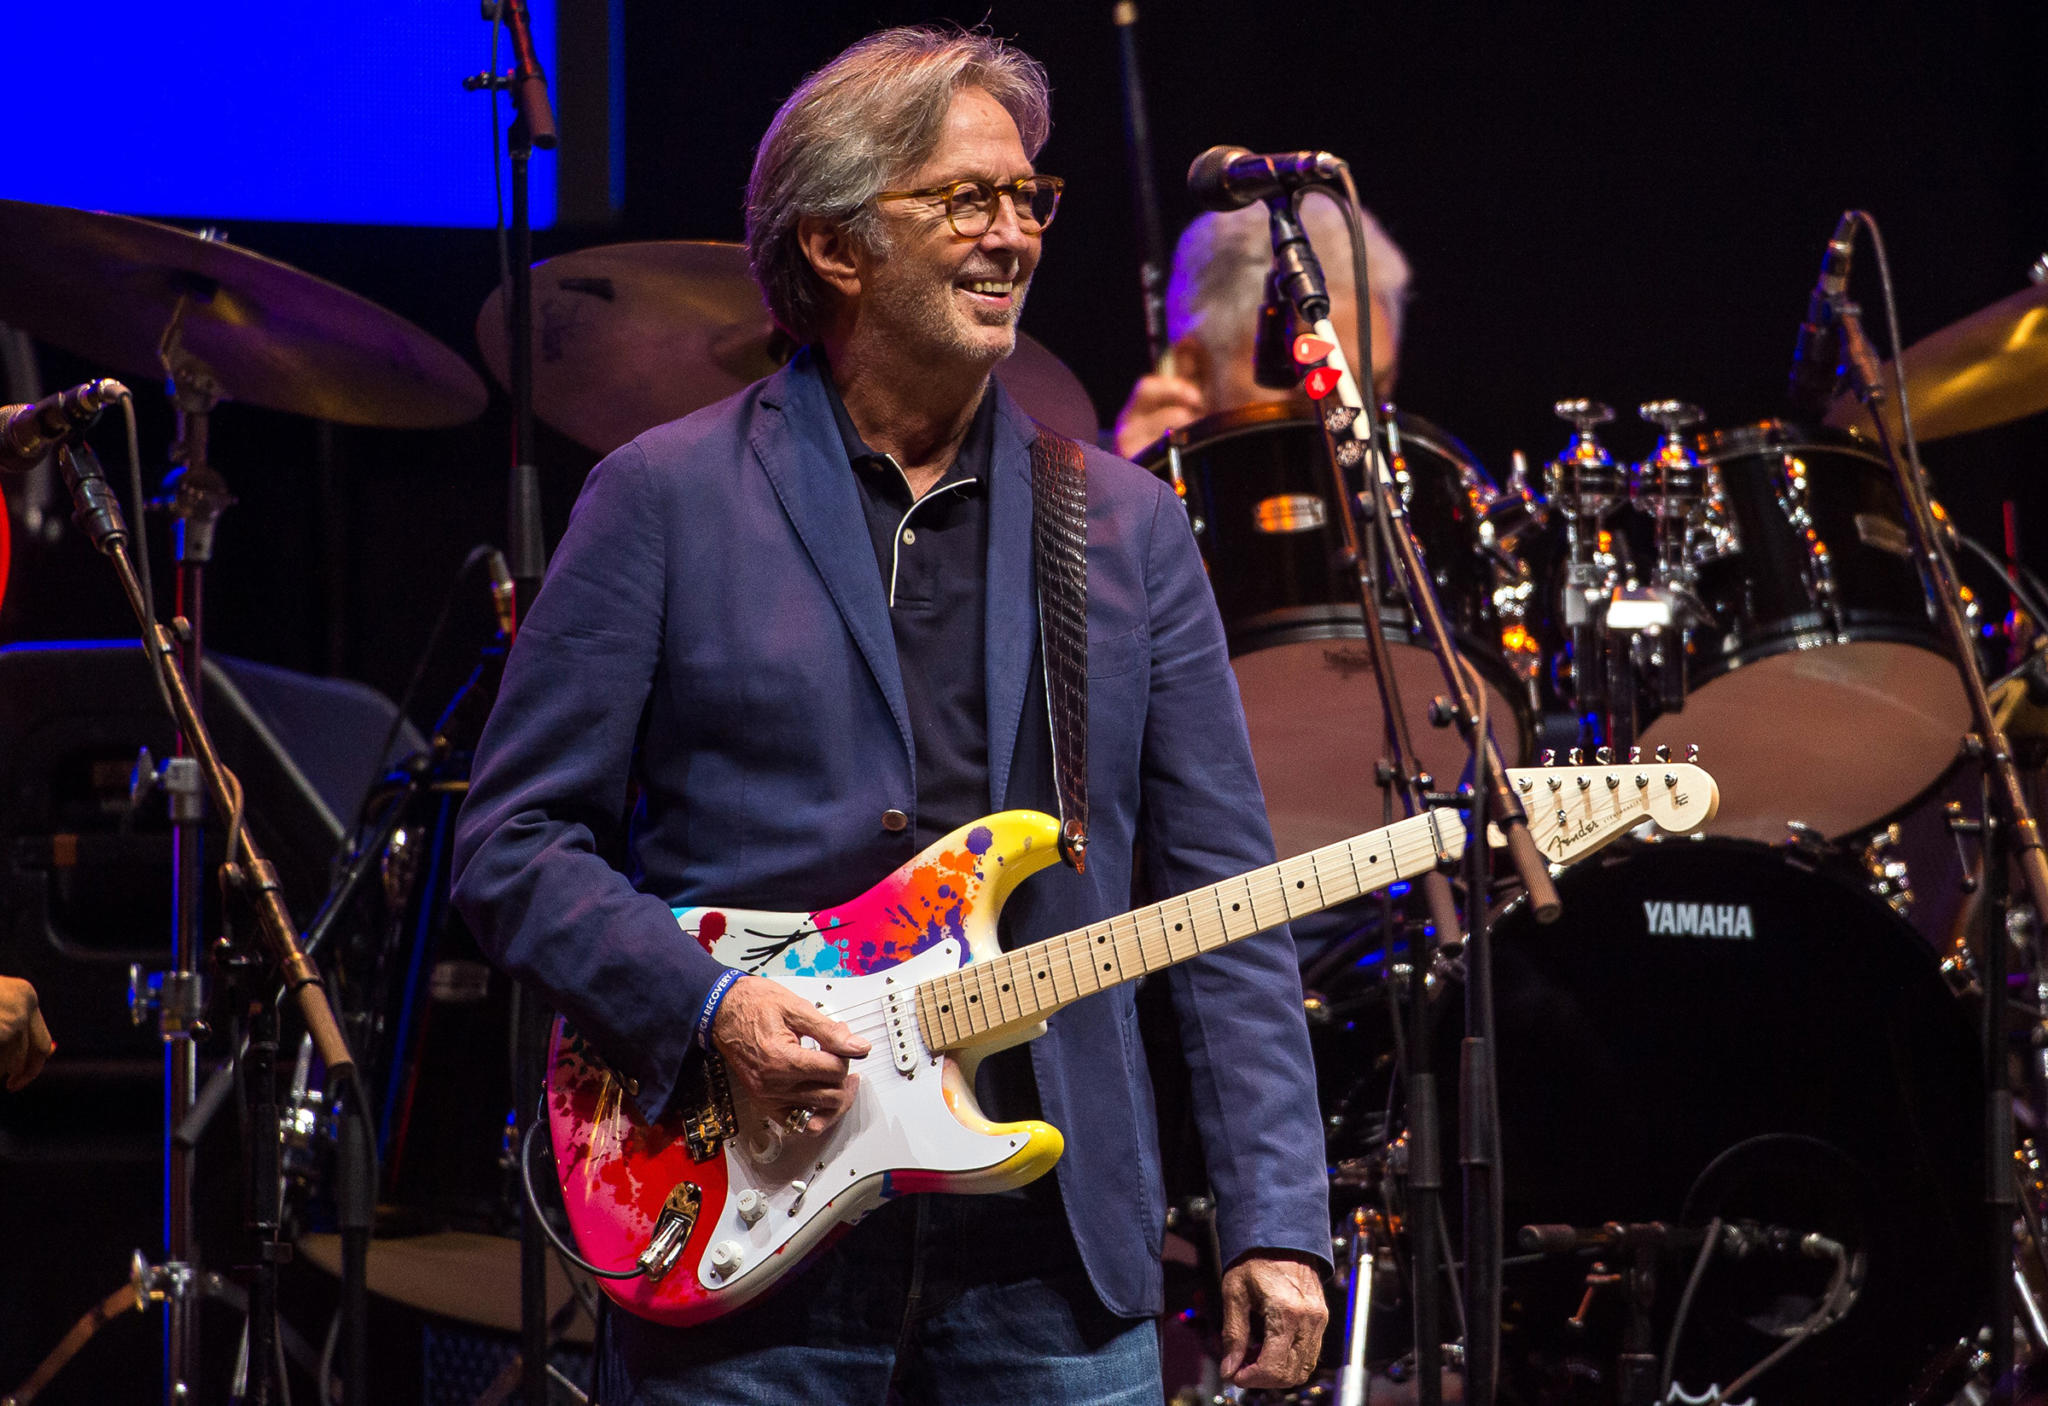 Eric Clapton, whose guitar started the Hard Rock memorabilia collection